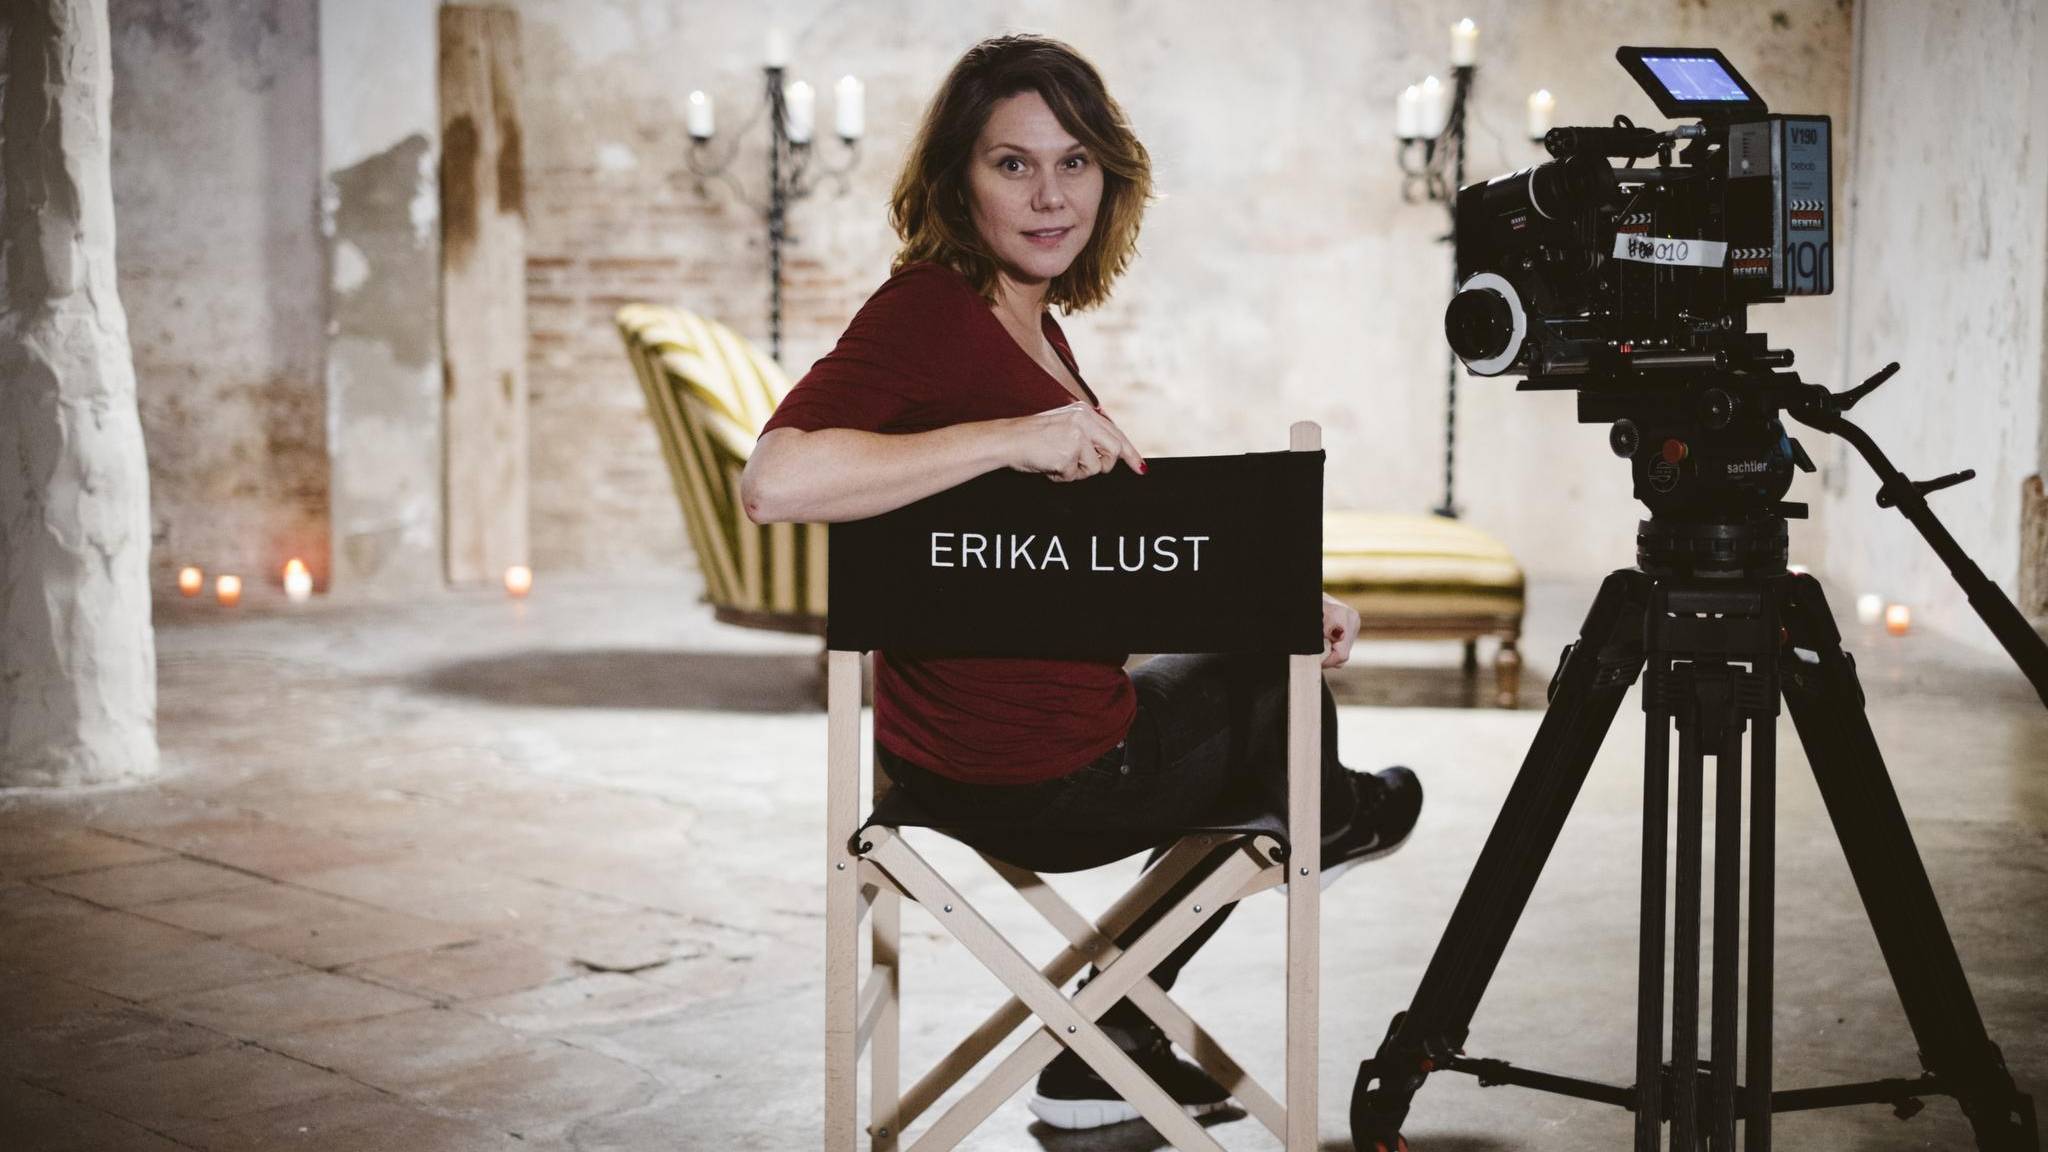 Erika Lust : Biography & Films to Watch